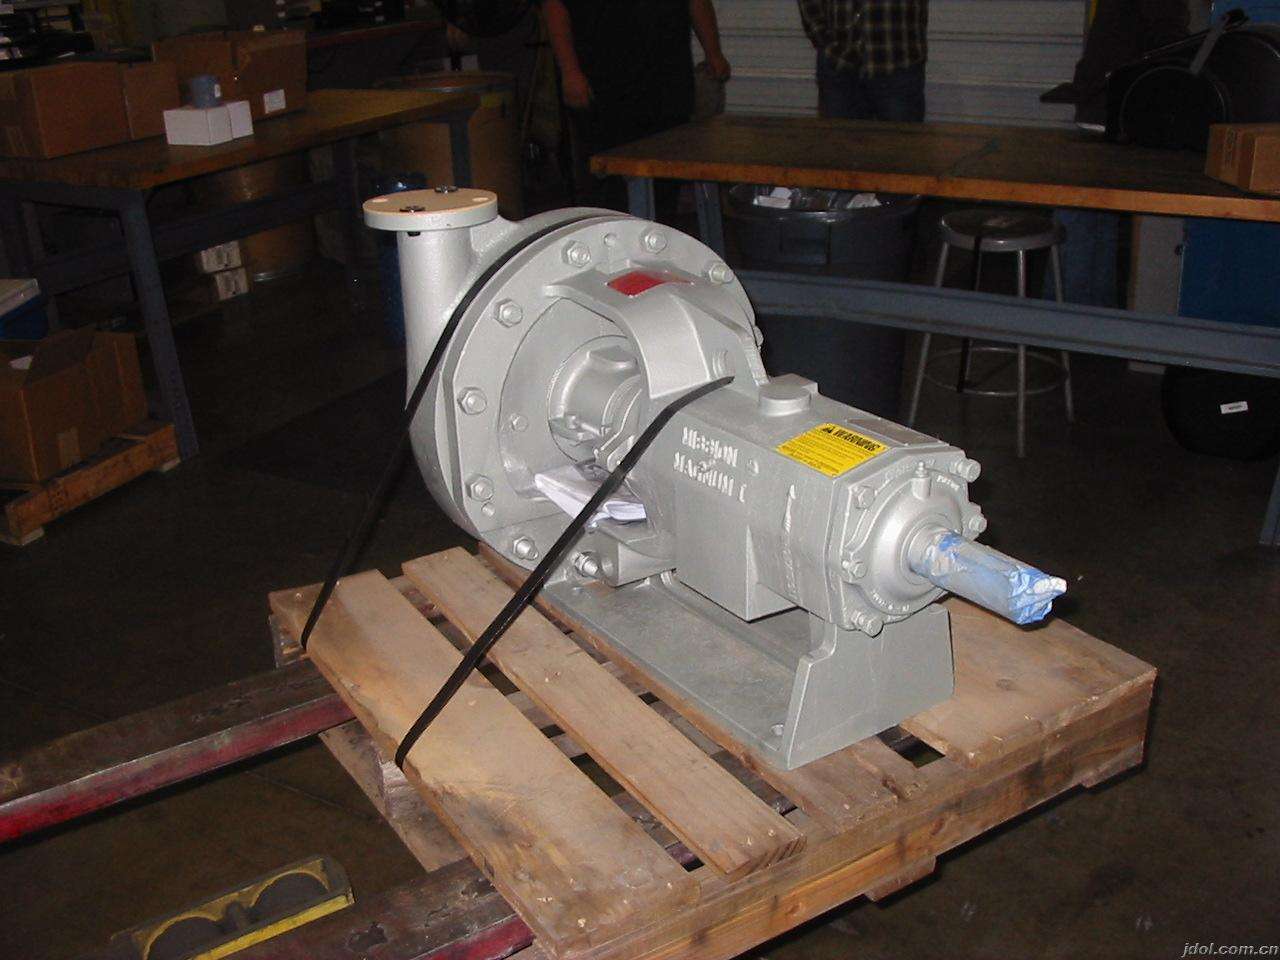 centrifugal-pump